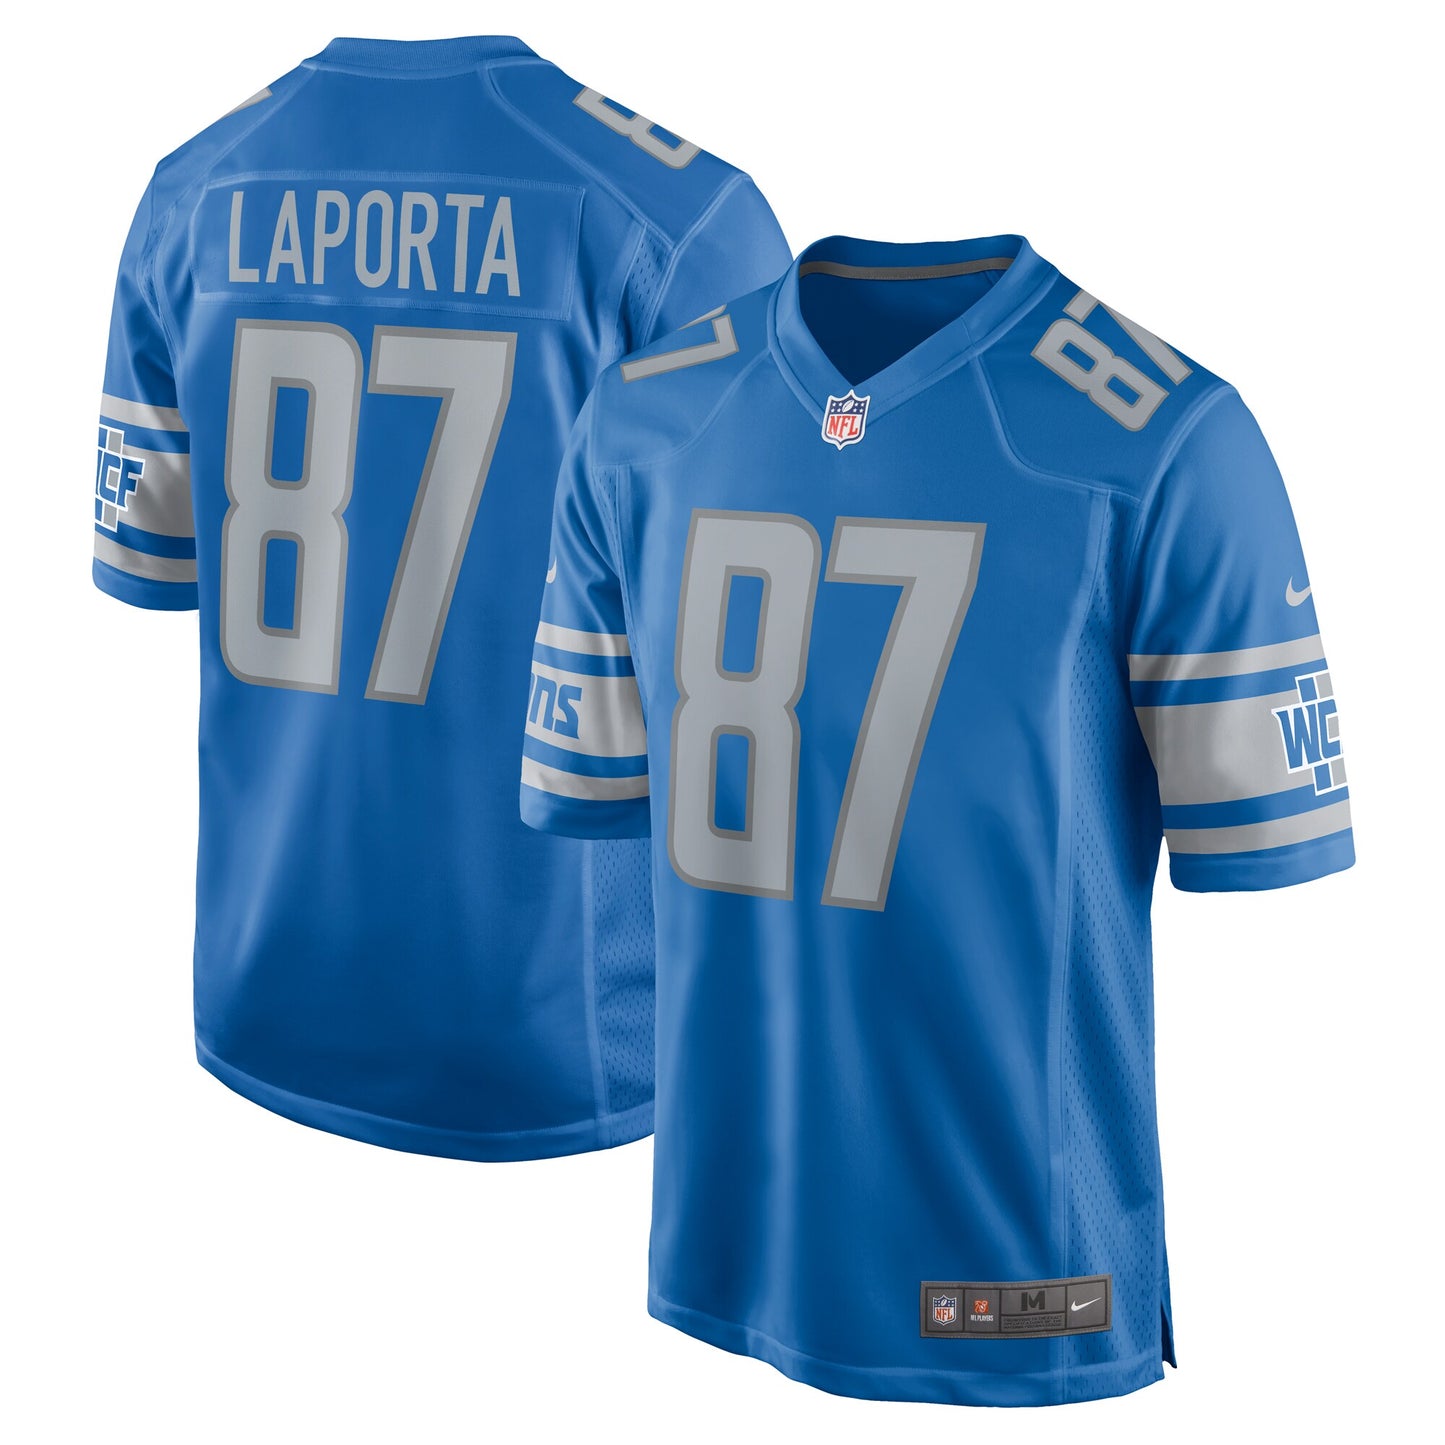 Sam Laporta Detroit Lions Nike Team Game Jersey - Blue